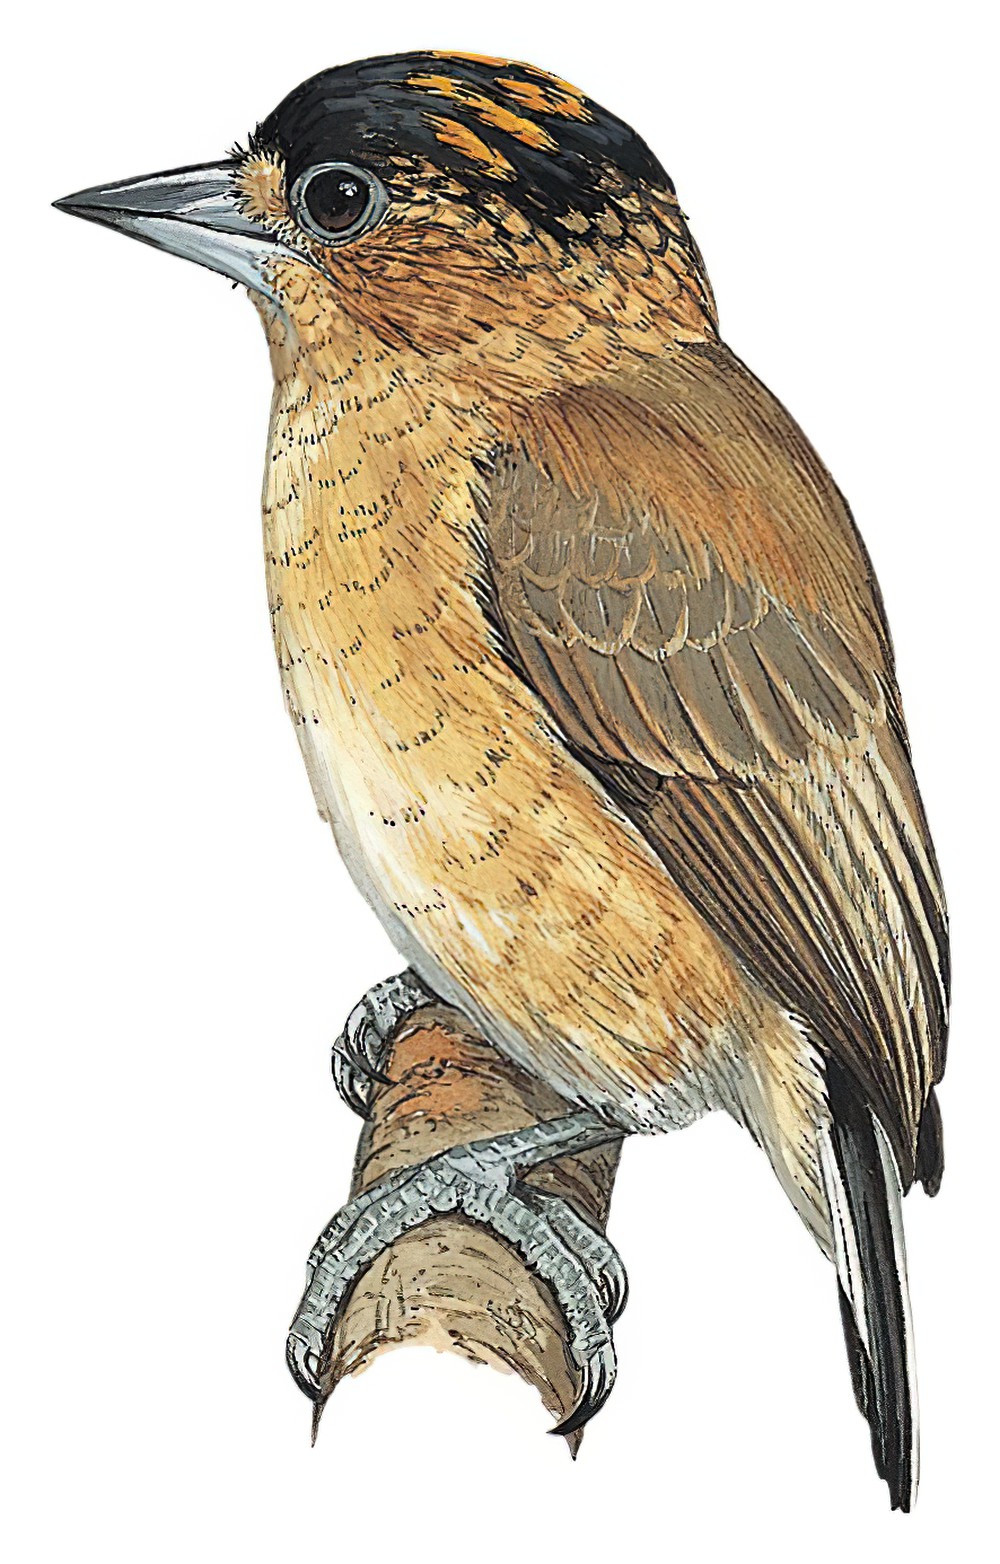 锈颈姬啄木鸟 / Rusty-necked Piculet / Picumnus fuscus